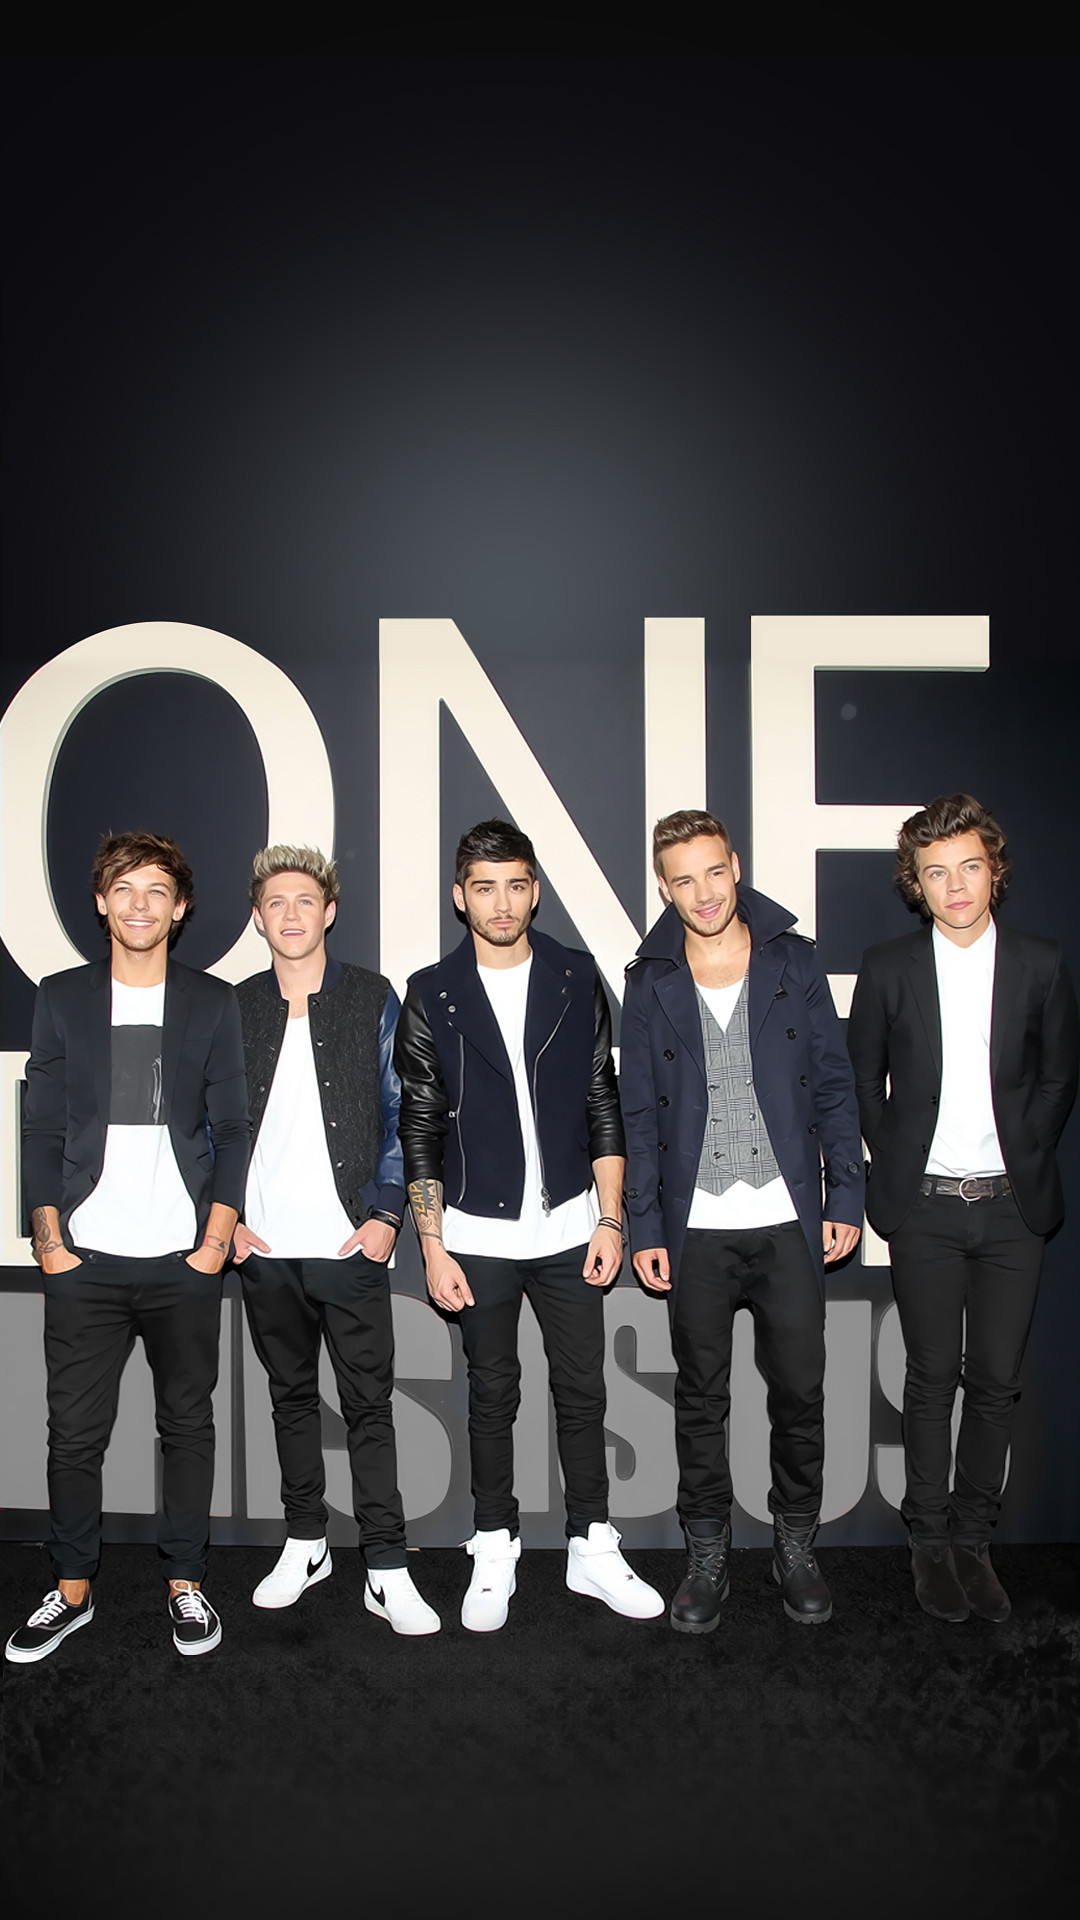 77+] One Direction Backgrounds - WallpaperSafari